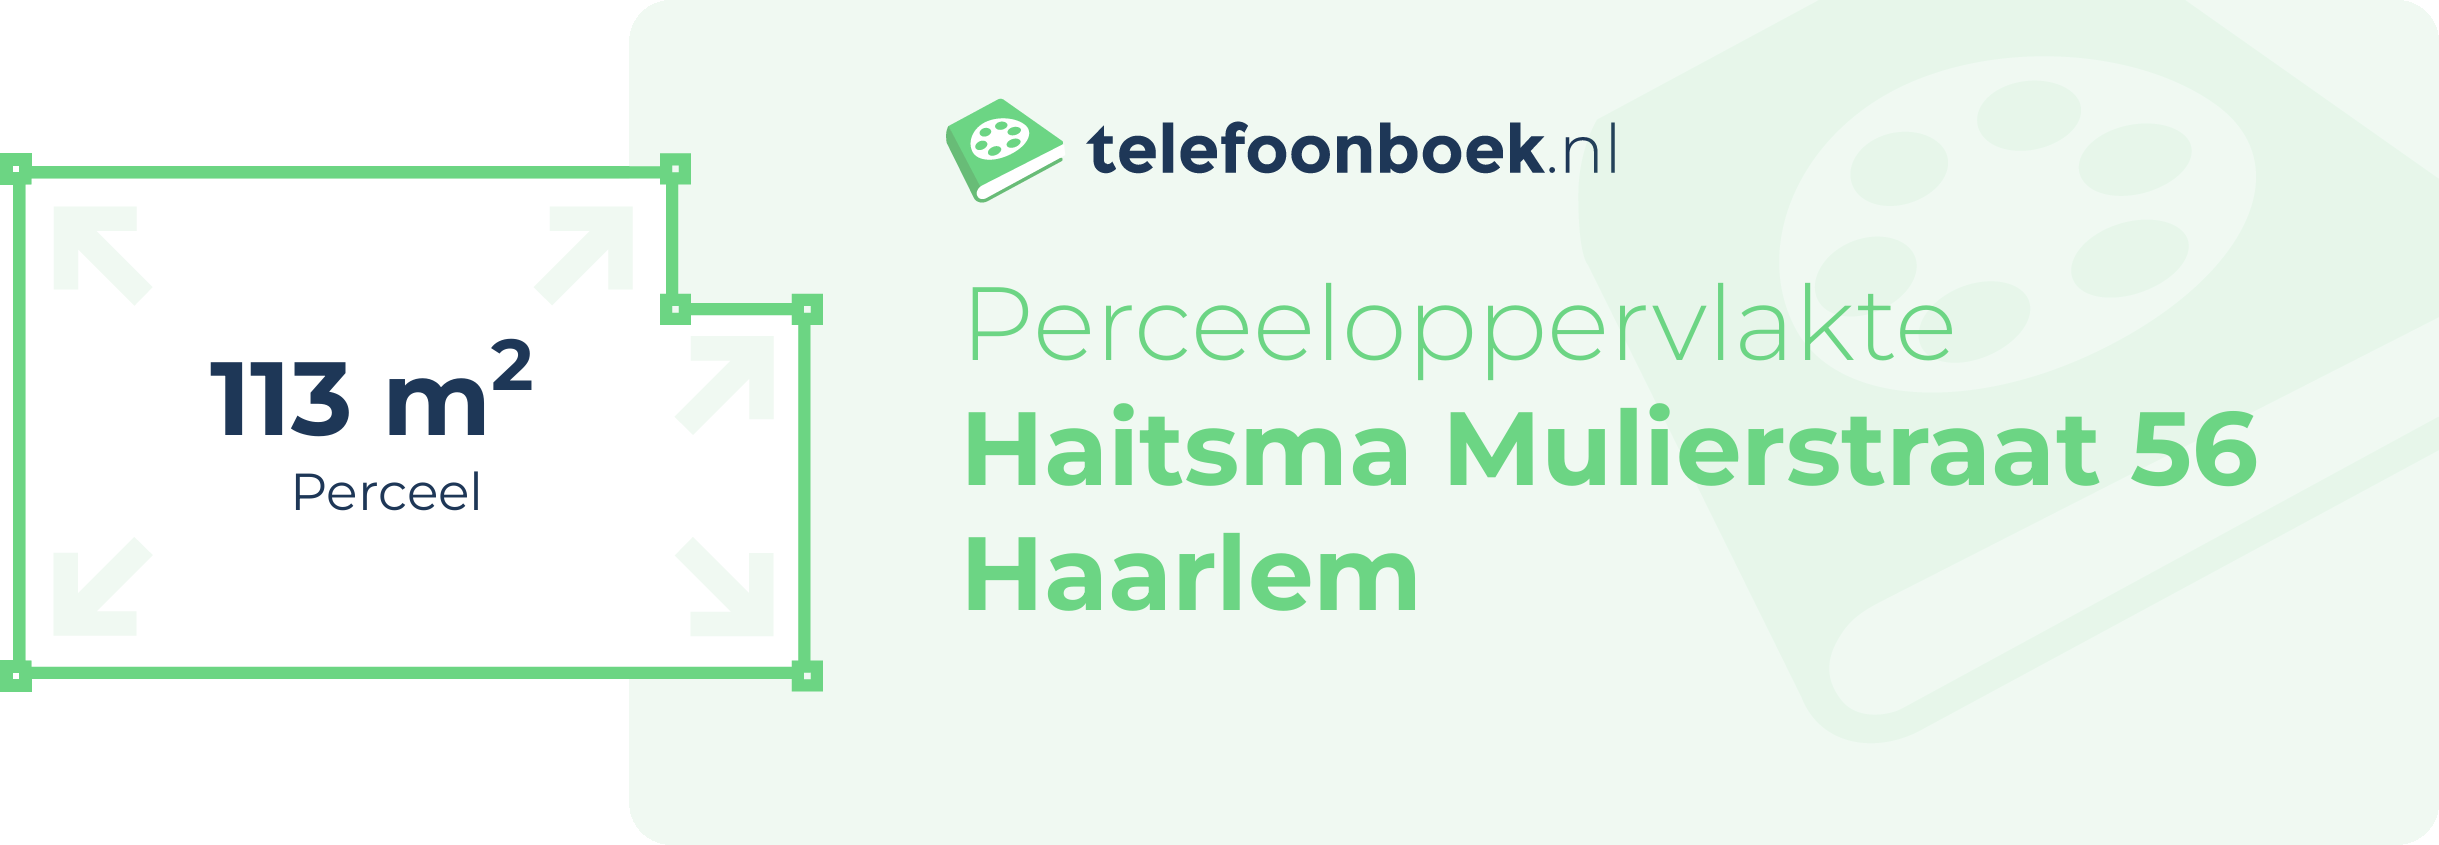 Perceeloppervlakte Haitsma Mulierstraat 56 Haarlem